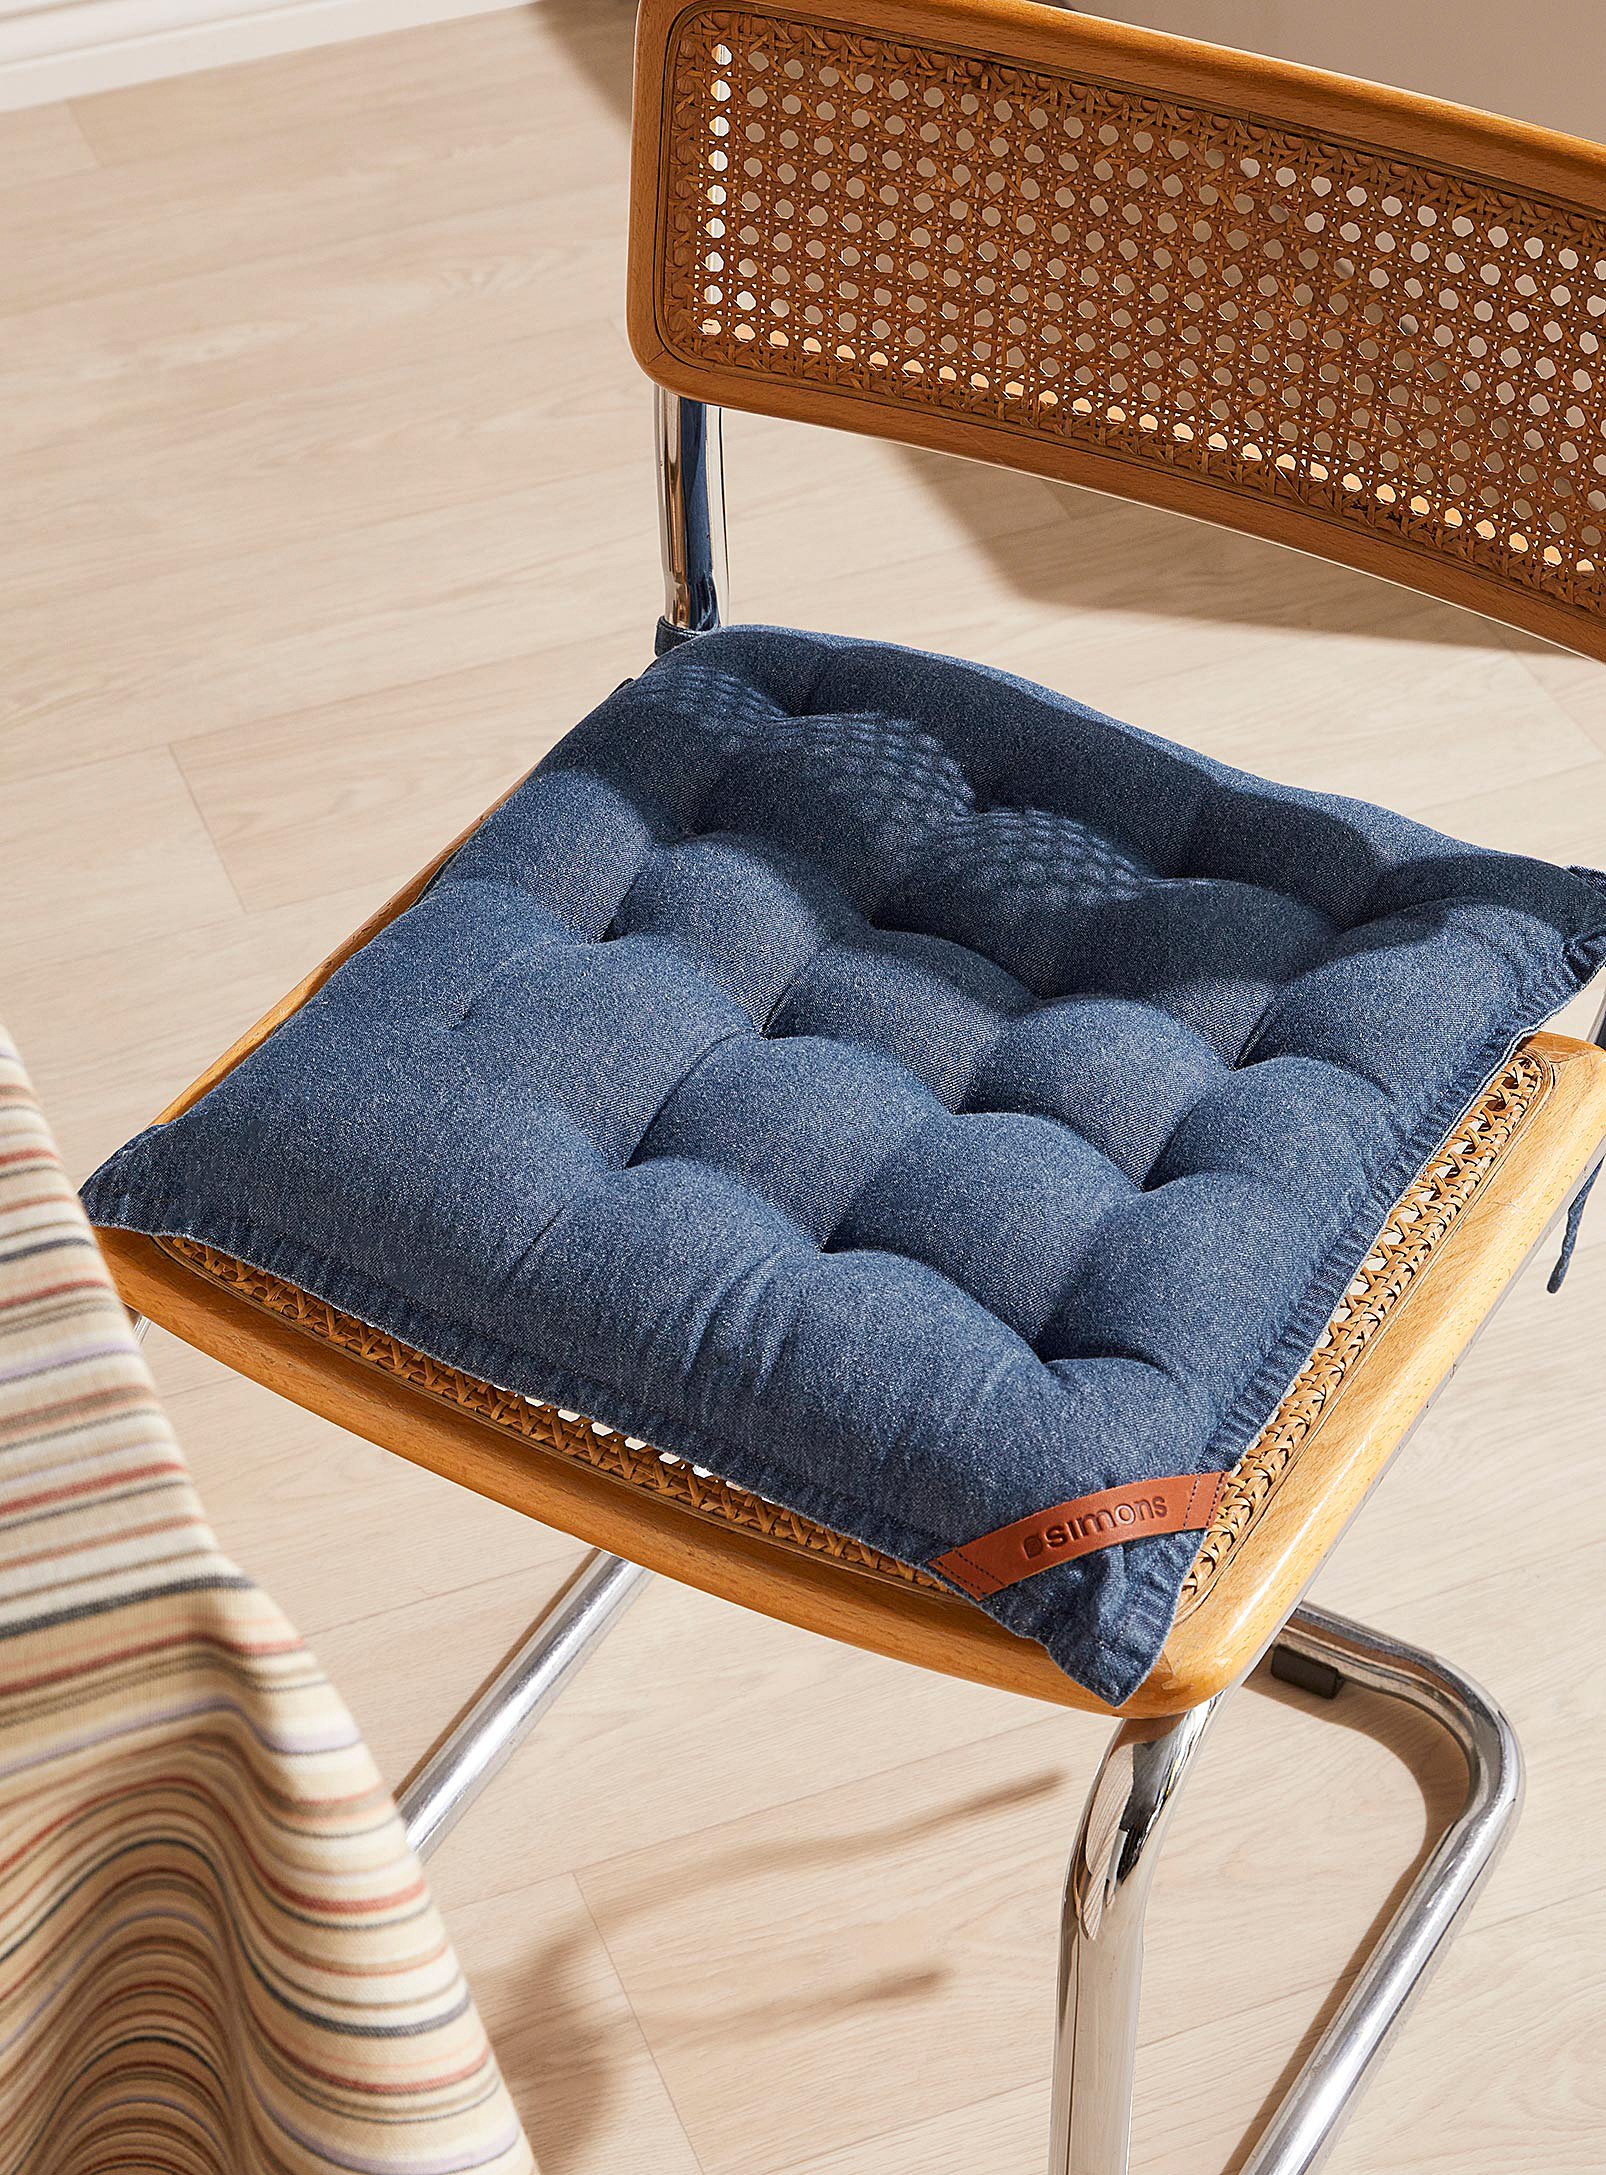 Simons Maison - Quilted denim chair cushion 40 x 40 cm